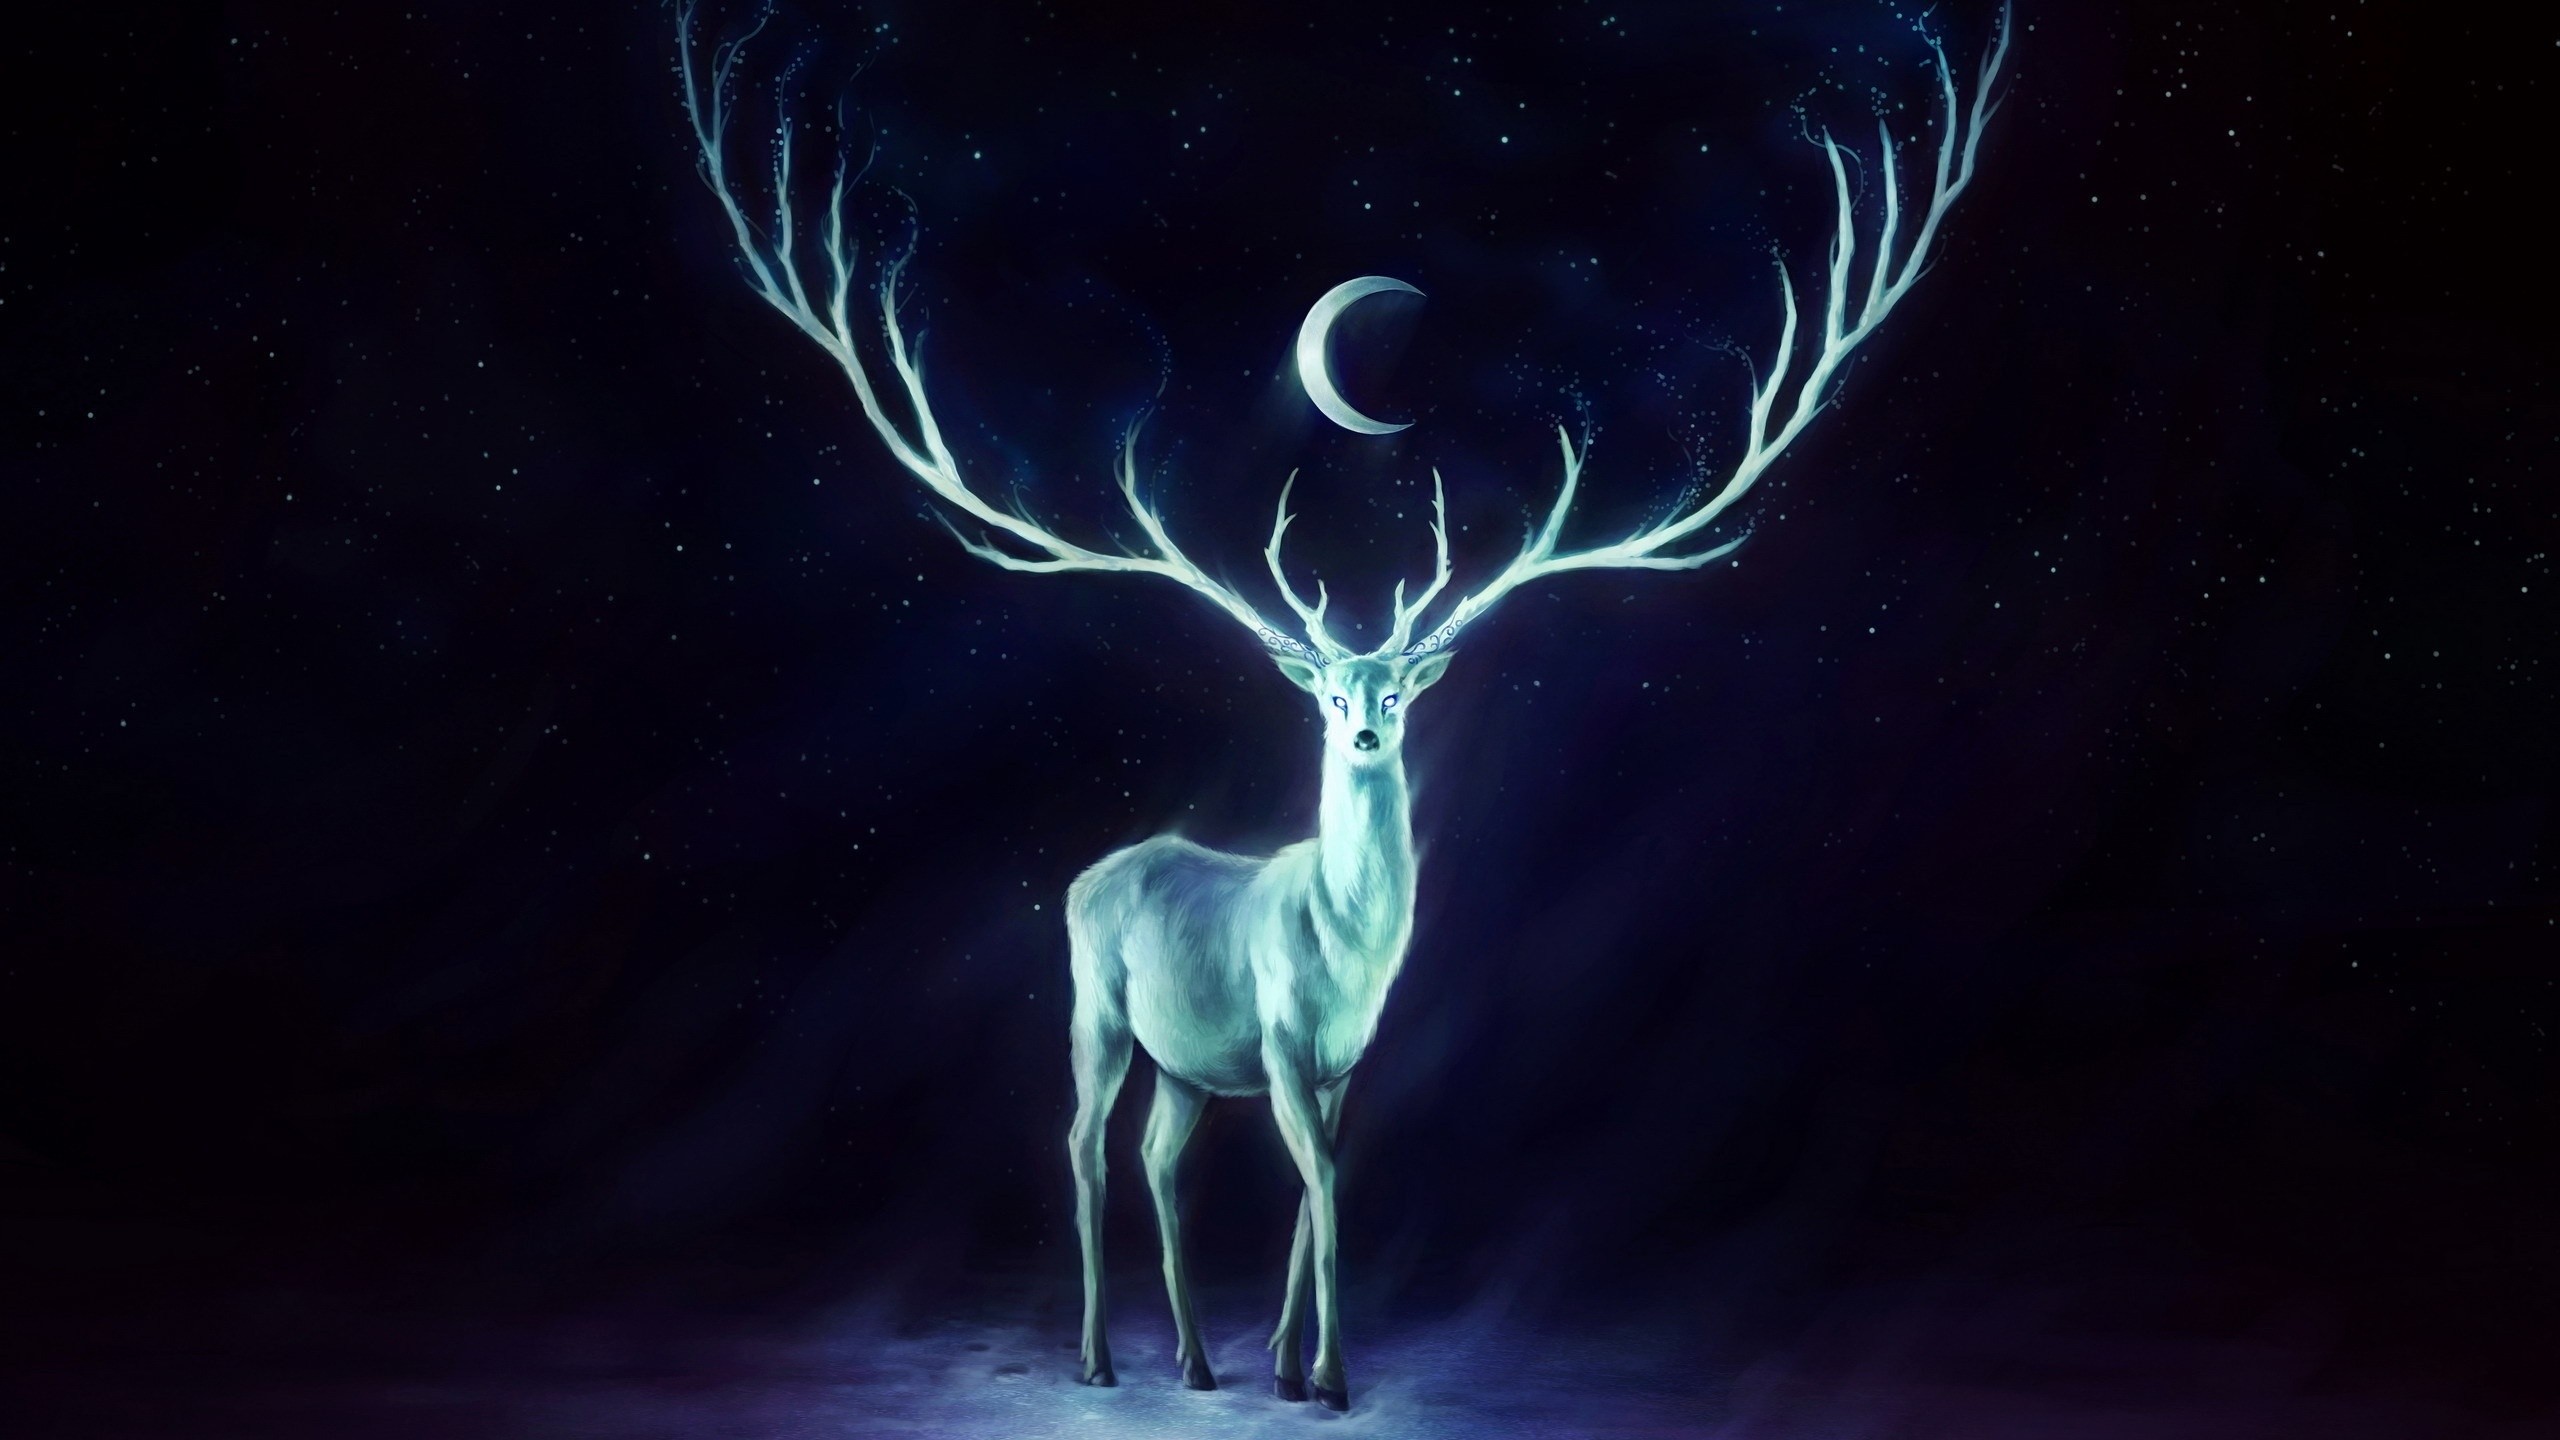 artwork, Crescent moon, Painting, Deer, Antlers, Stags, Fantasy art Wallpaper